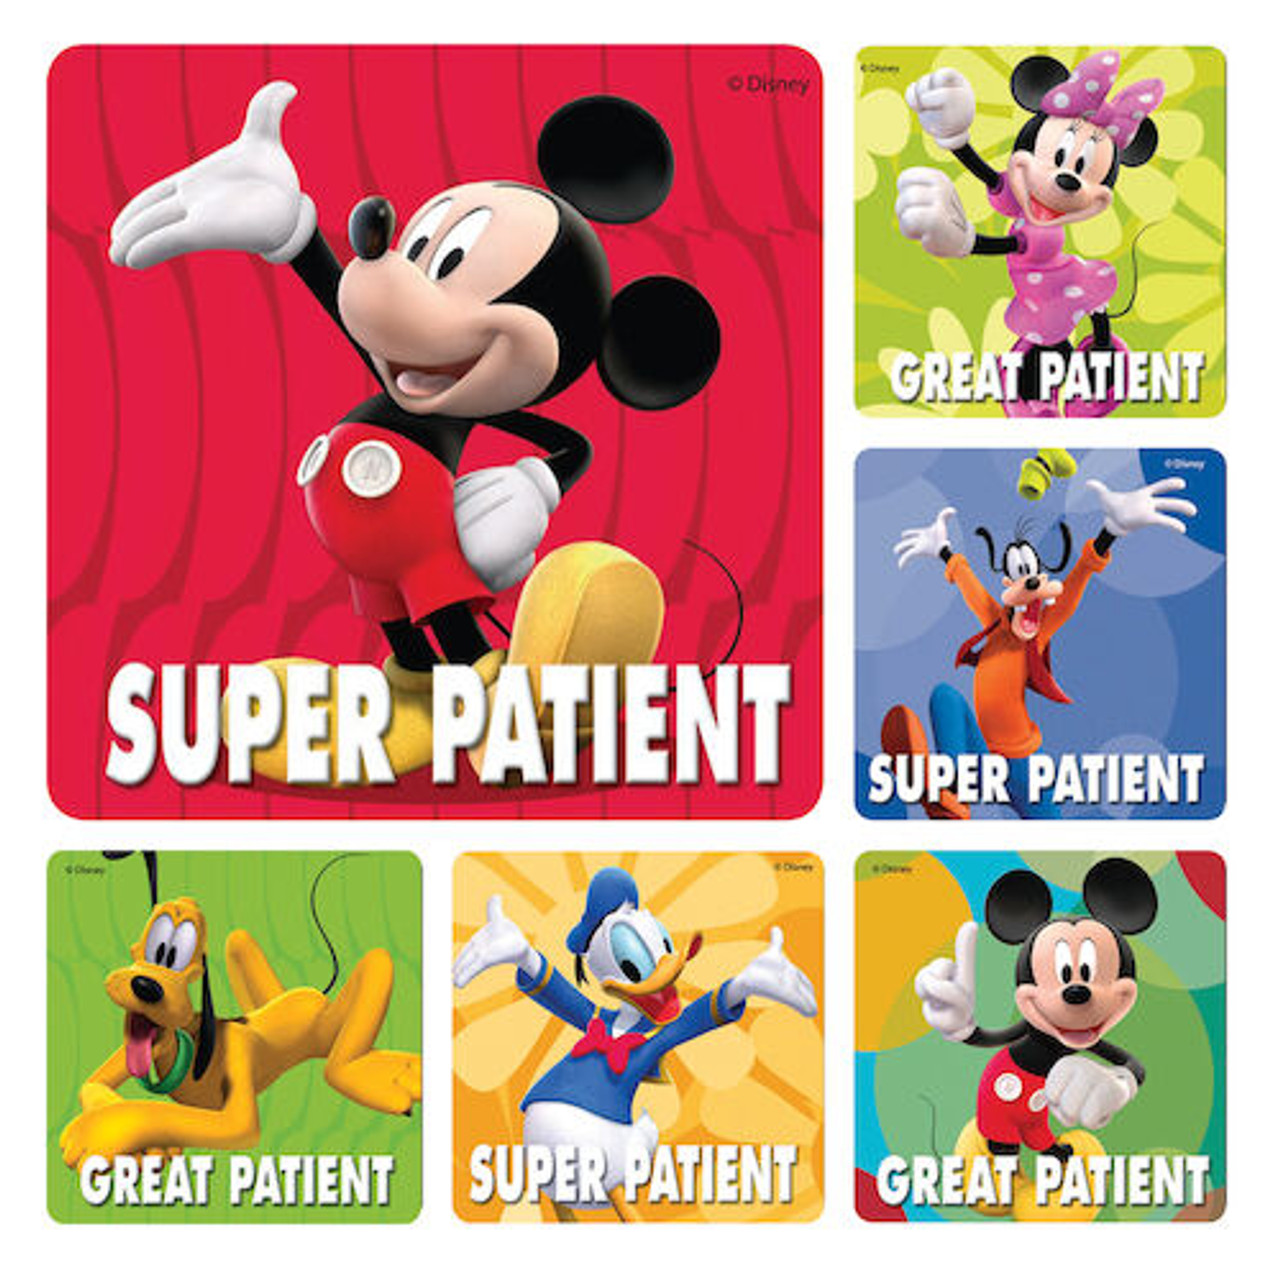 Kids Stickers, Disney Stickers, Bulk Stickers - Medical, Dental, Banking